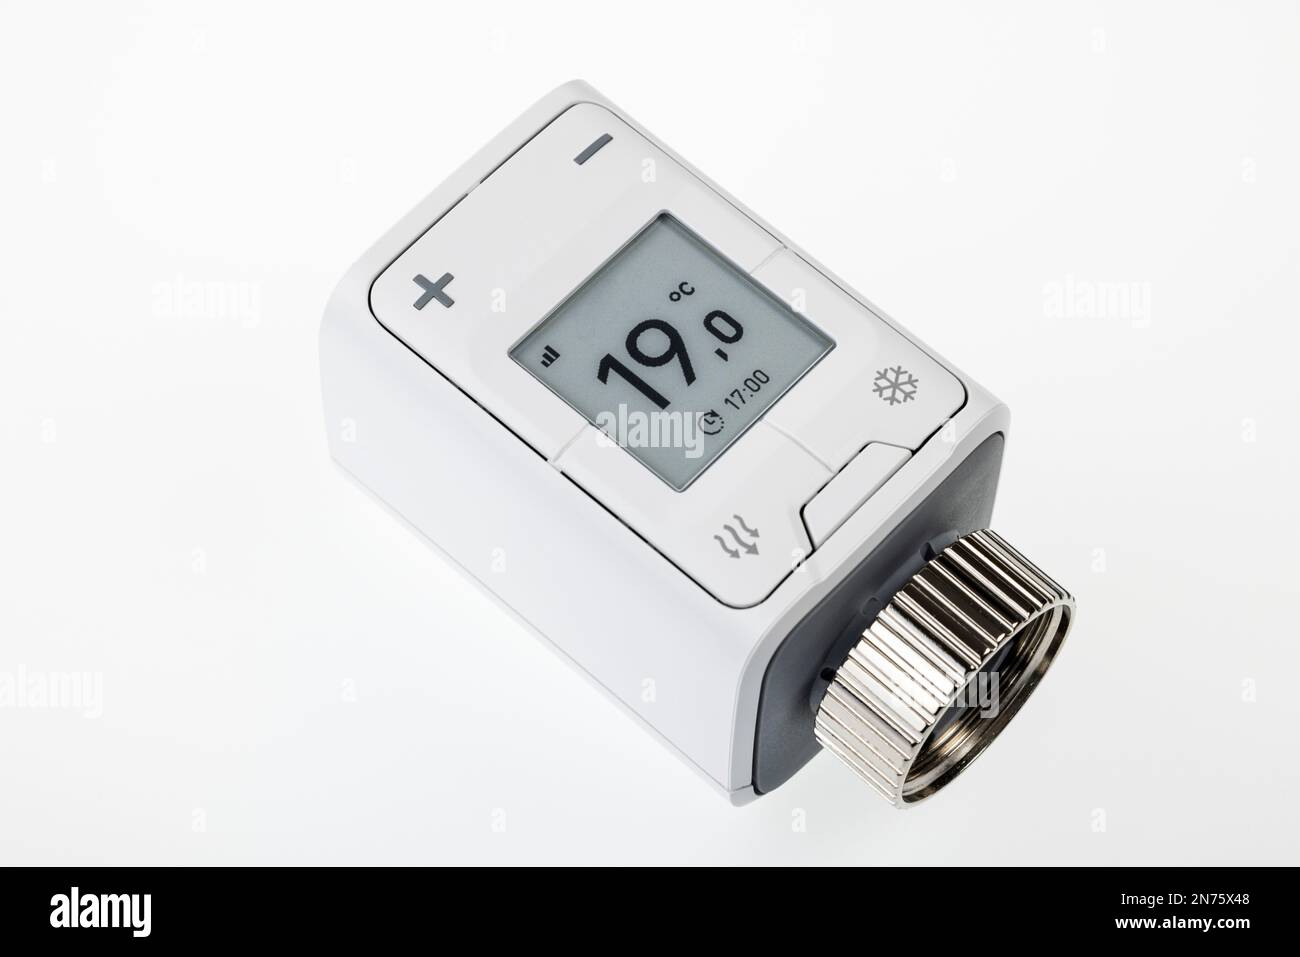 WLAN radiator thermostat FRITZ! DECT 302, display shows 1ö°C